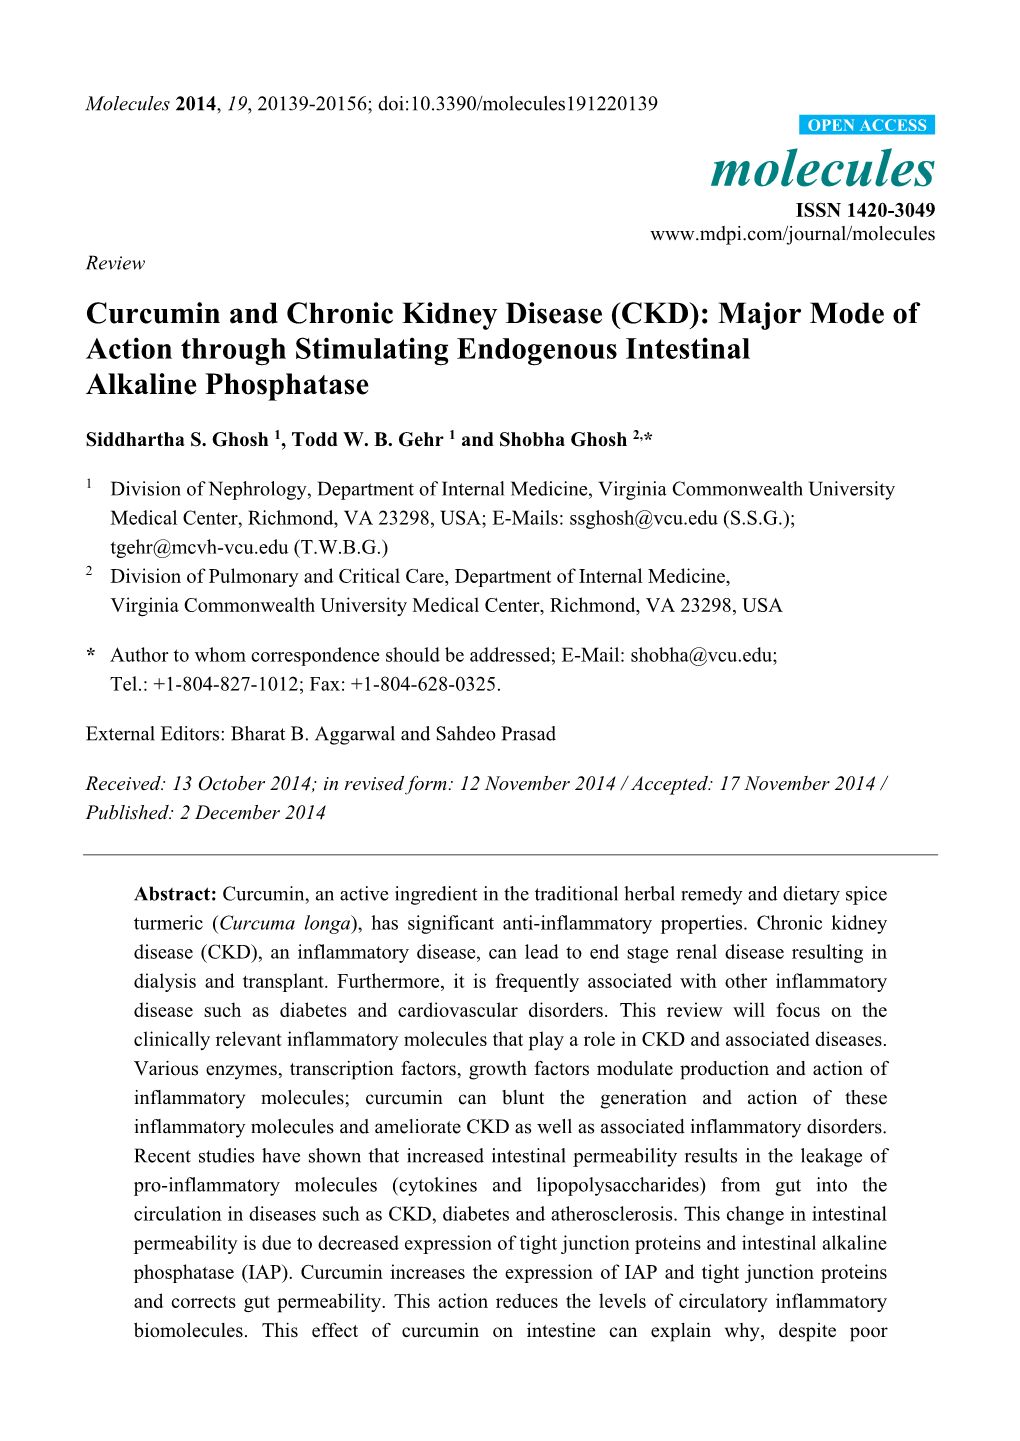 Curcumin and Chronic Kidney Disease (CKD): Major Mode of Action Through Stimulating Endogenous Intestinal Alkaline Phosphatase